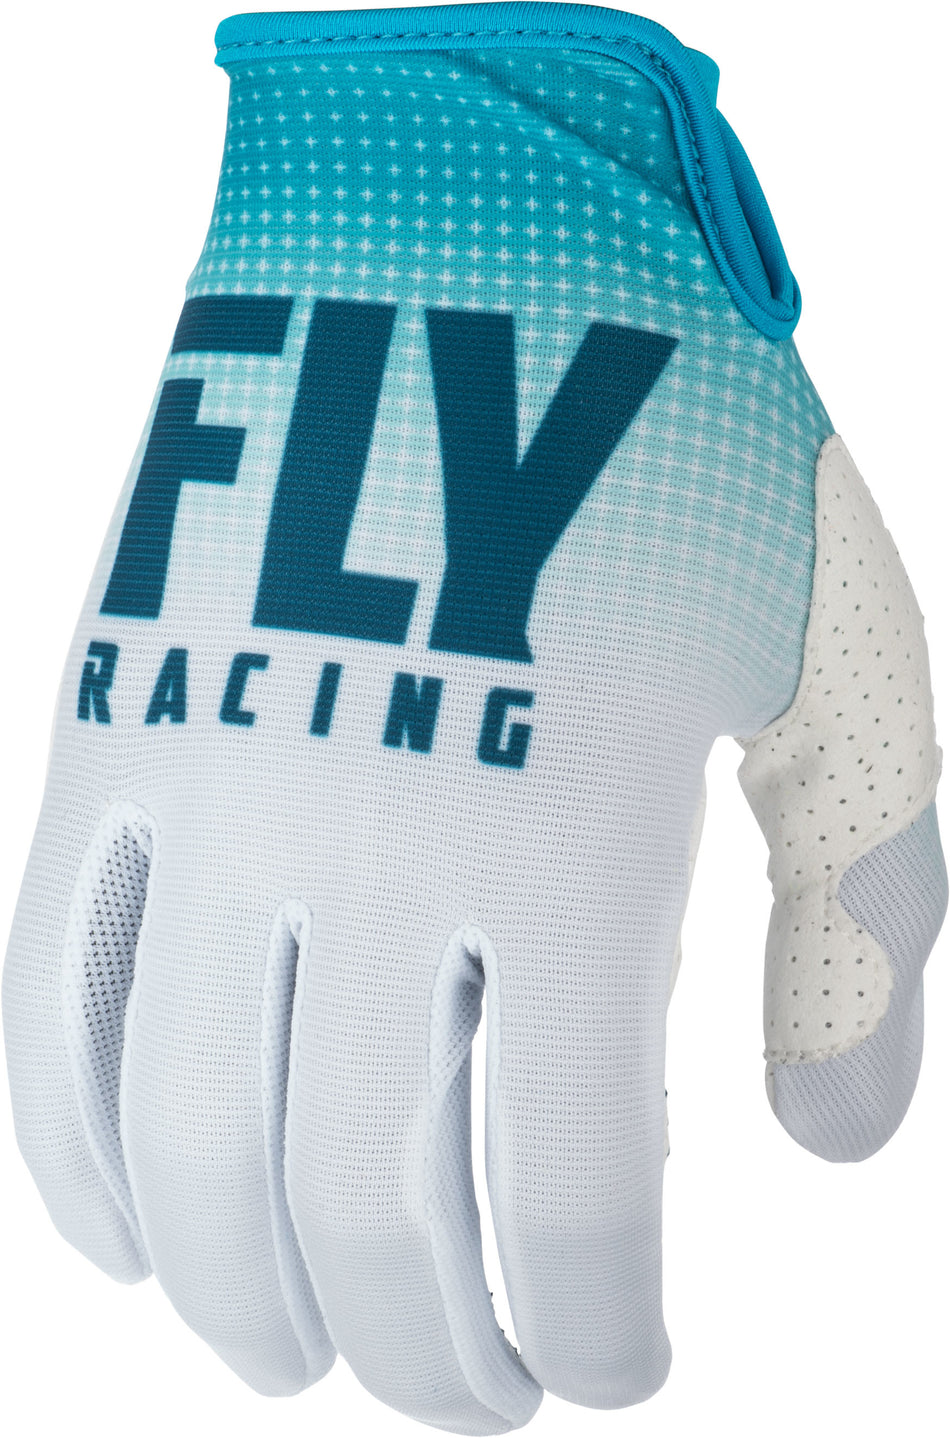 FLY RACING Lite Gloves Blue/White Sz 09 372-01109